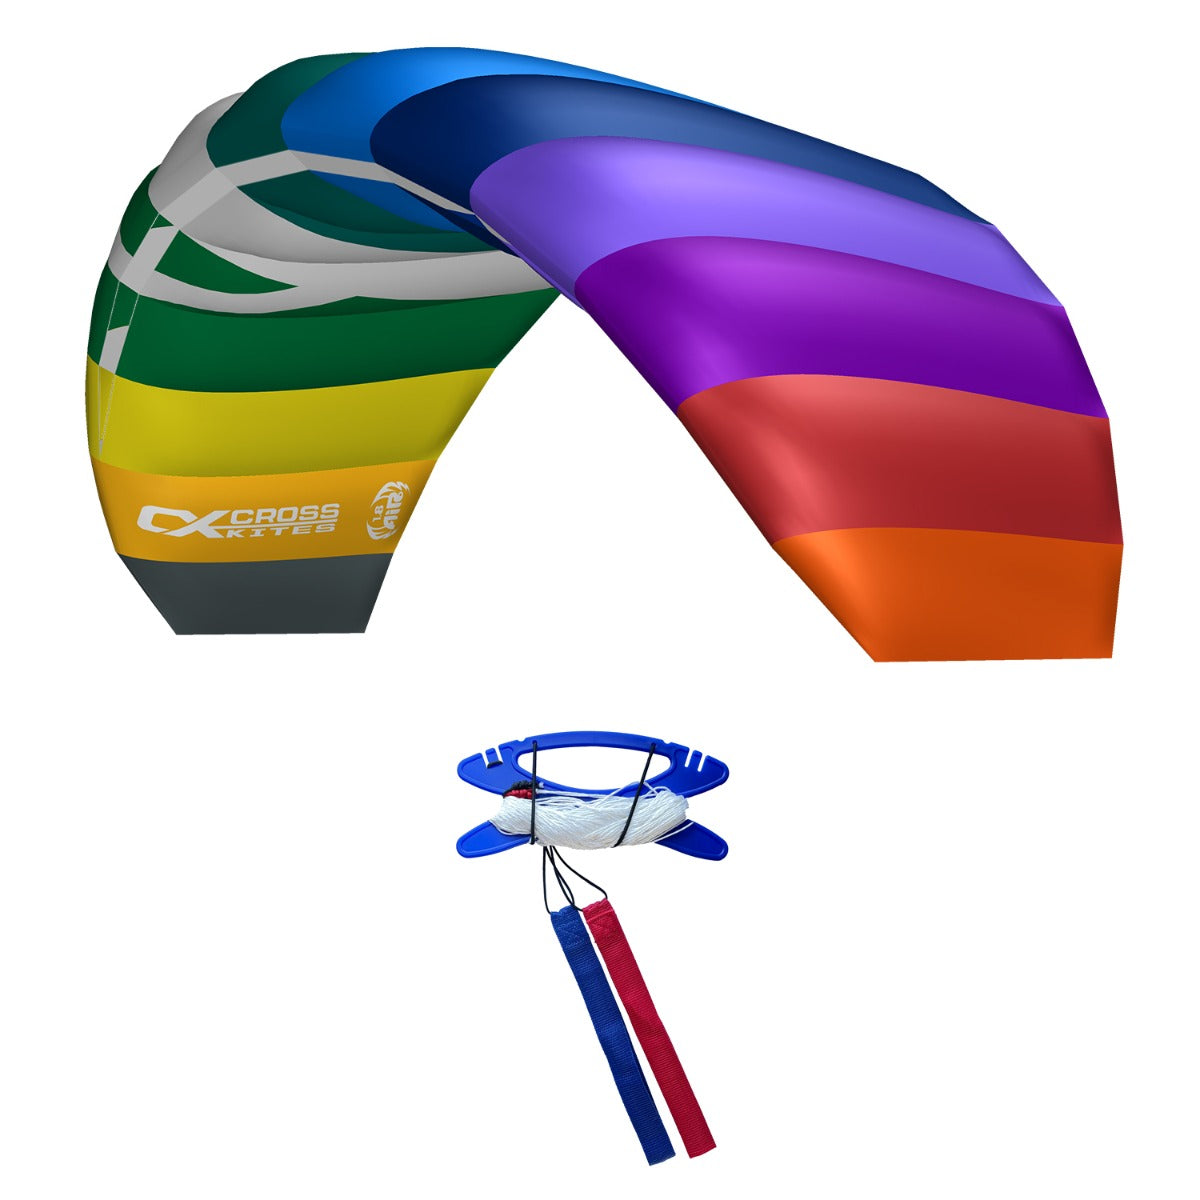 CrossKites Lenkmatte CrossKites Air 1.8 Rainbow Ready to Fly Lenkmatte 2 Leiner Kite Matte